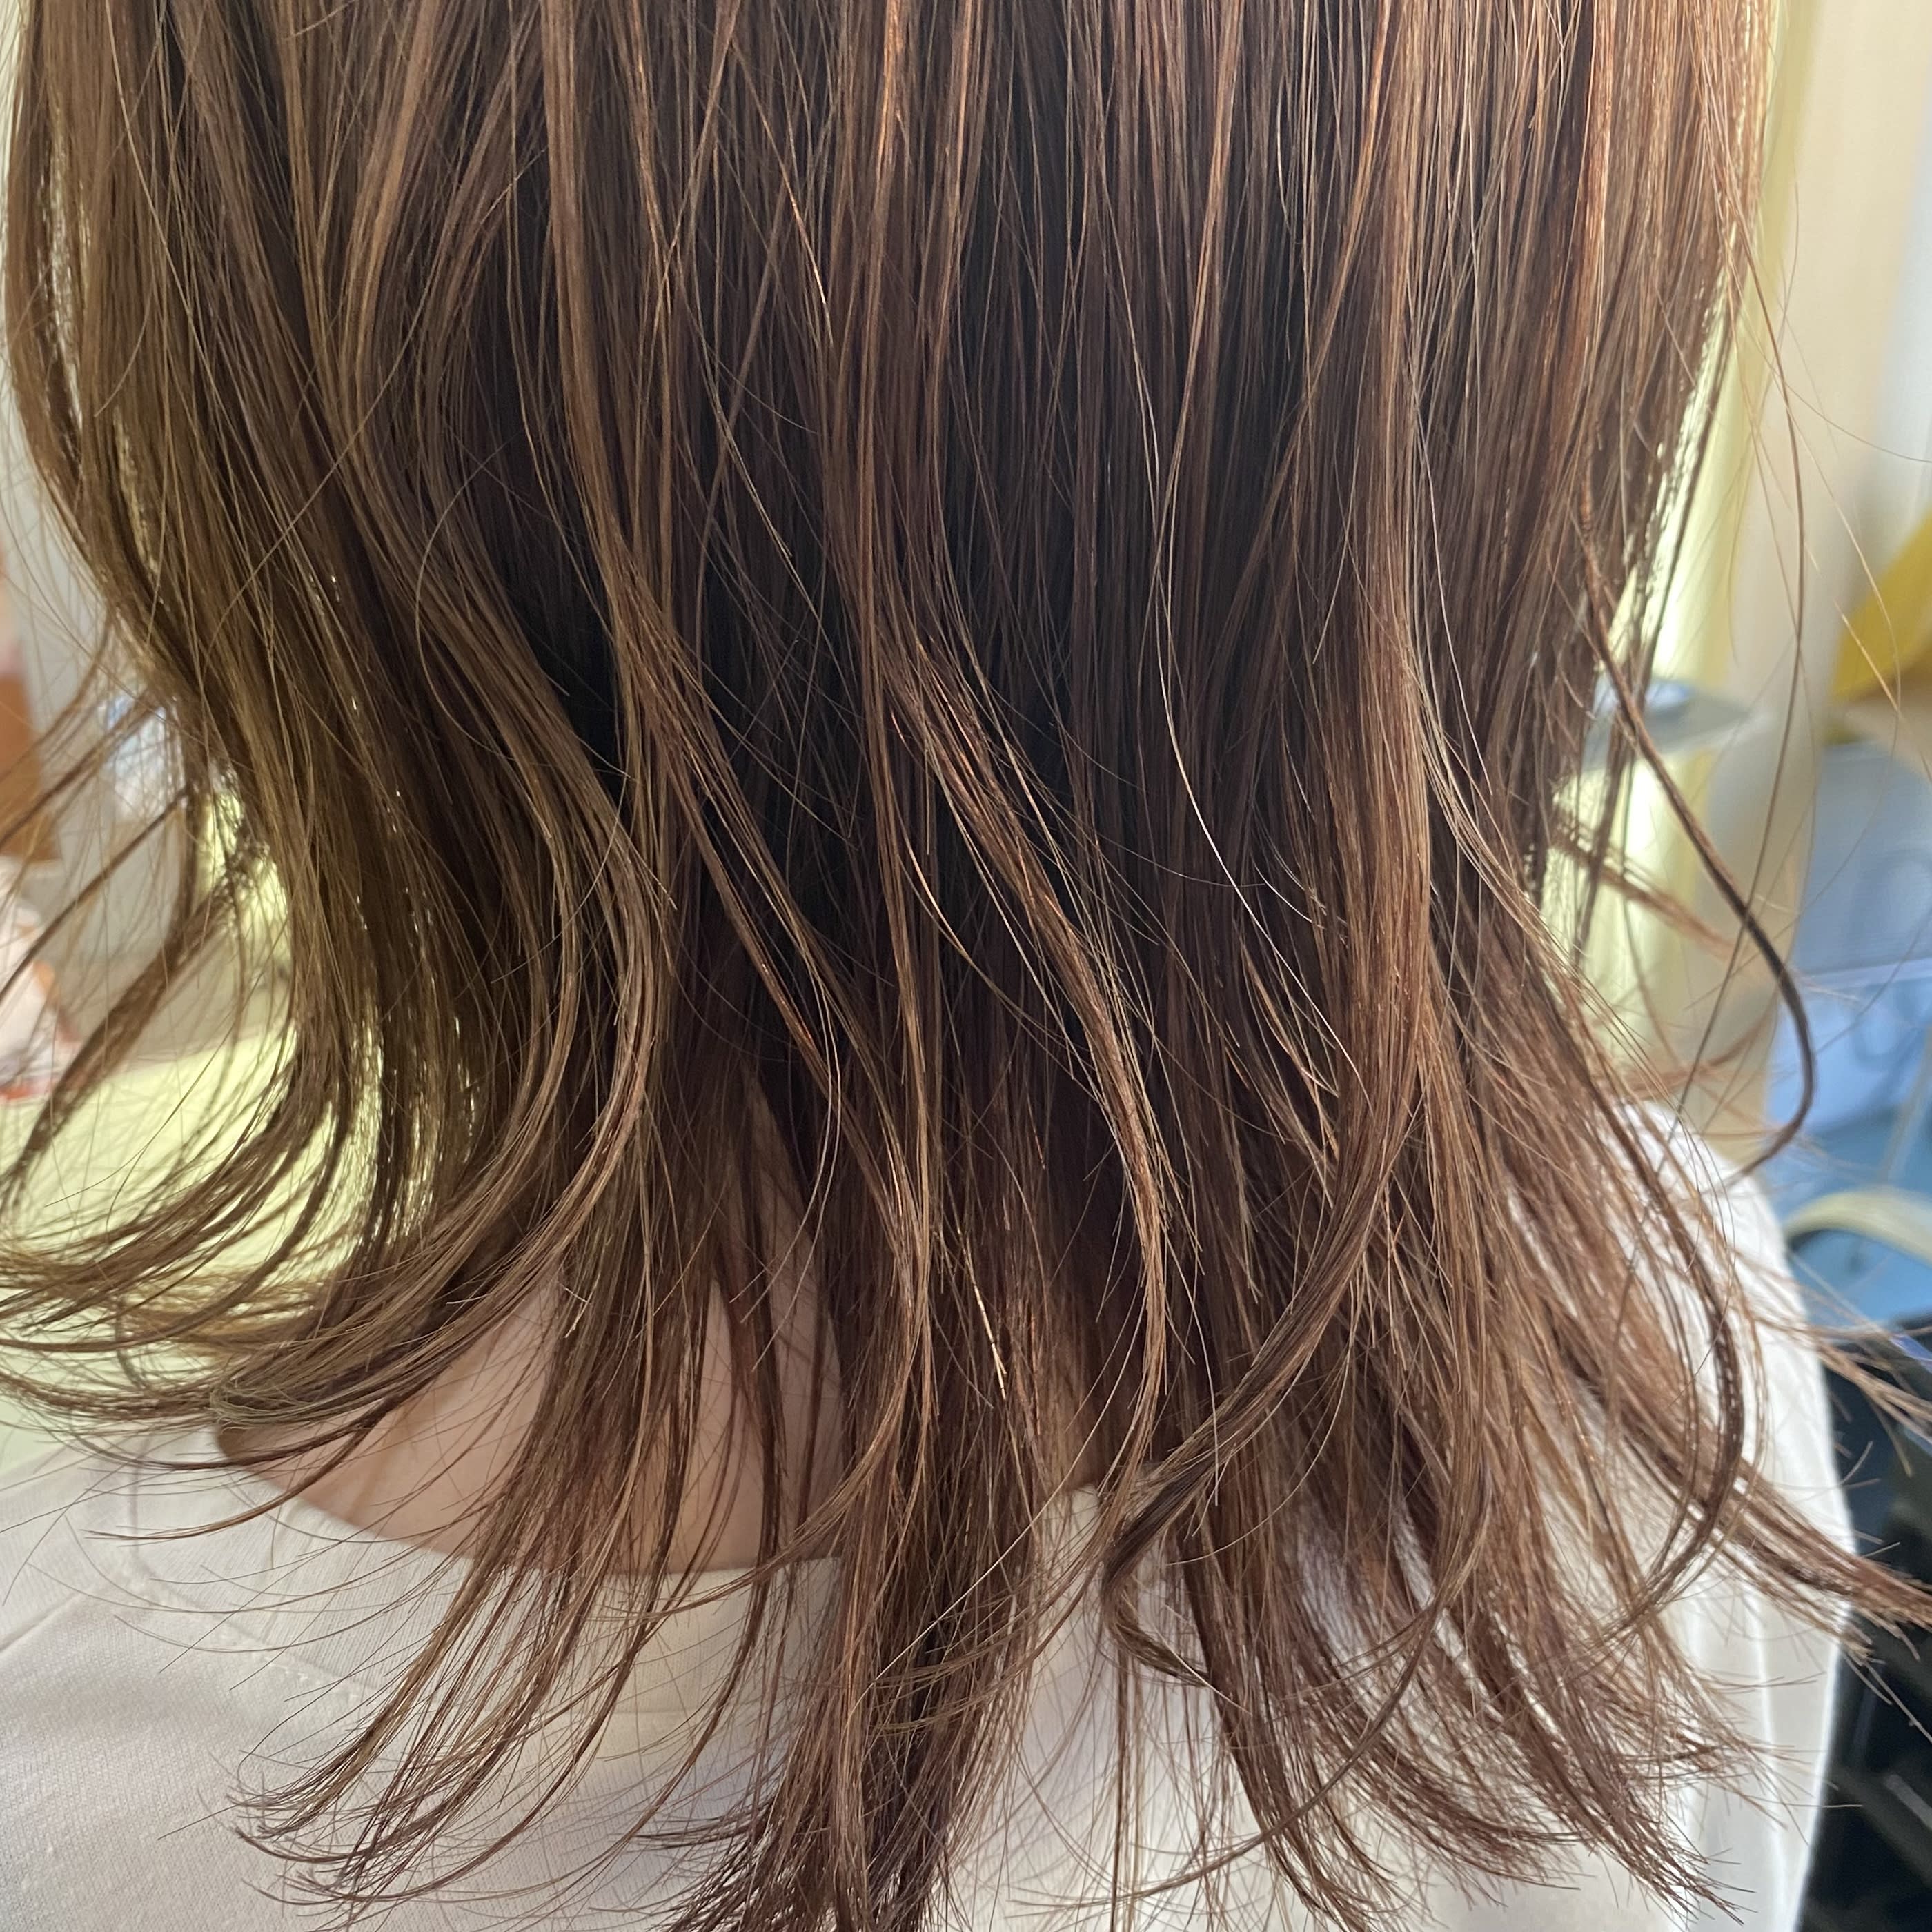 HAIR MODE STUDIO N's【ヘアーモード スタジオエヌズ】のスタイル紹介。ミディアムヘアカラー